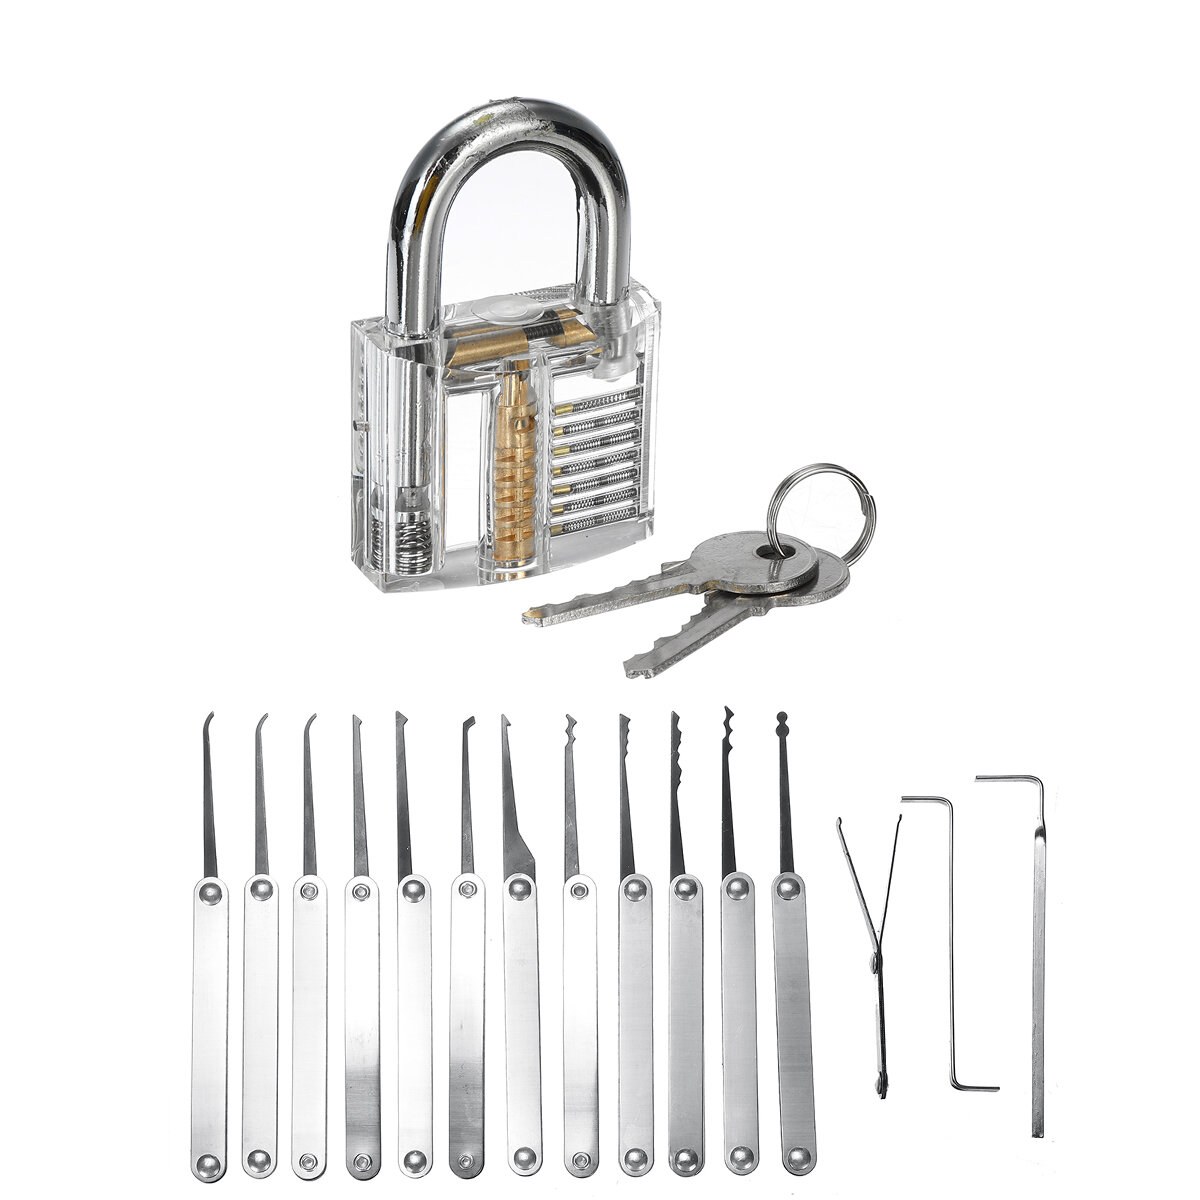 

19PCS Unlocking Locksmith Practice Lock Pick Key Extractor Padlock Lockpick Tool Kits